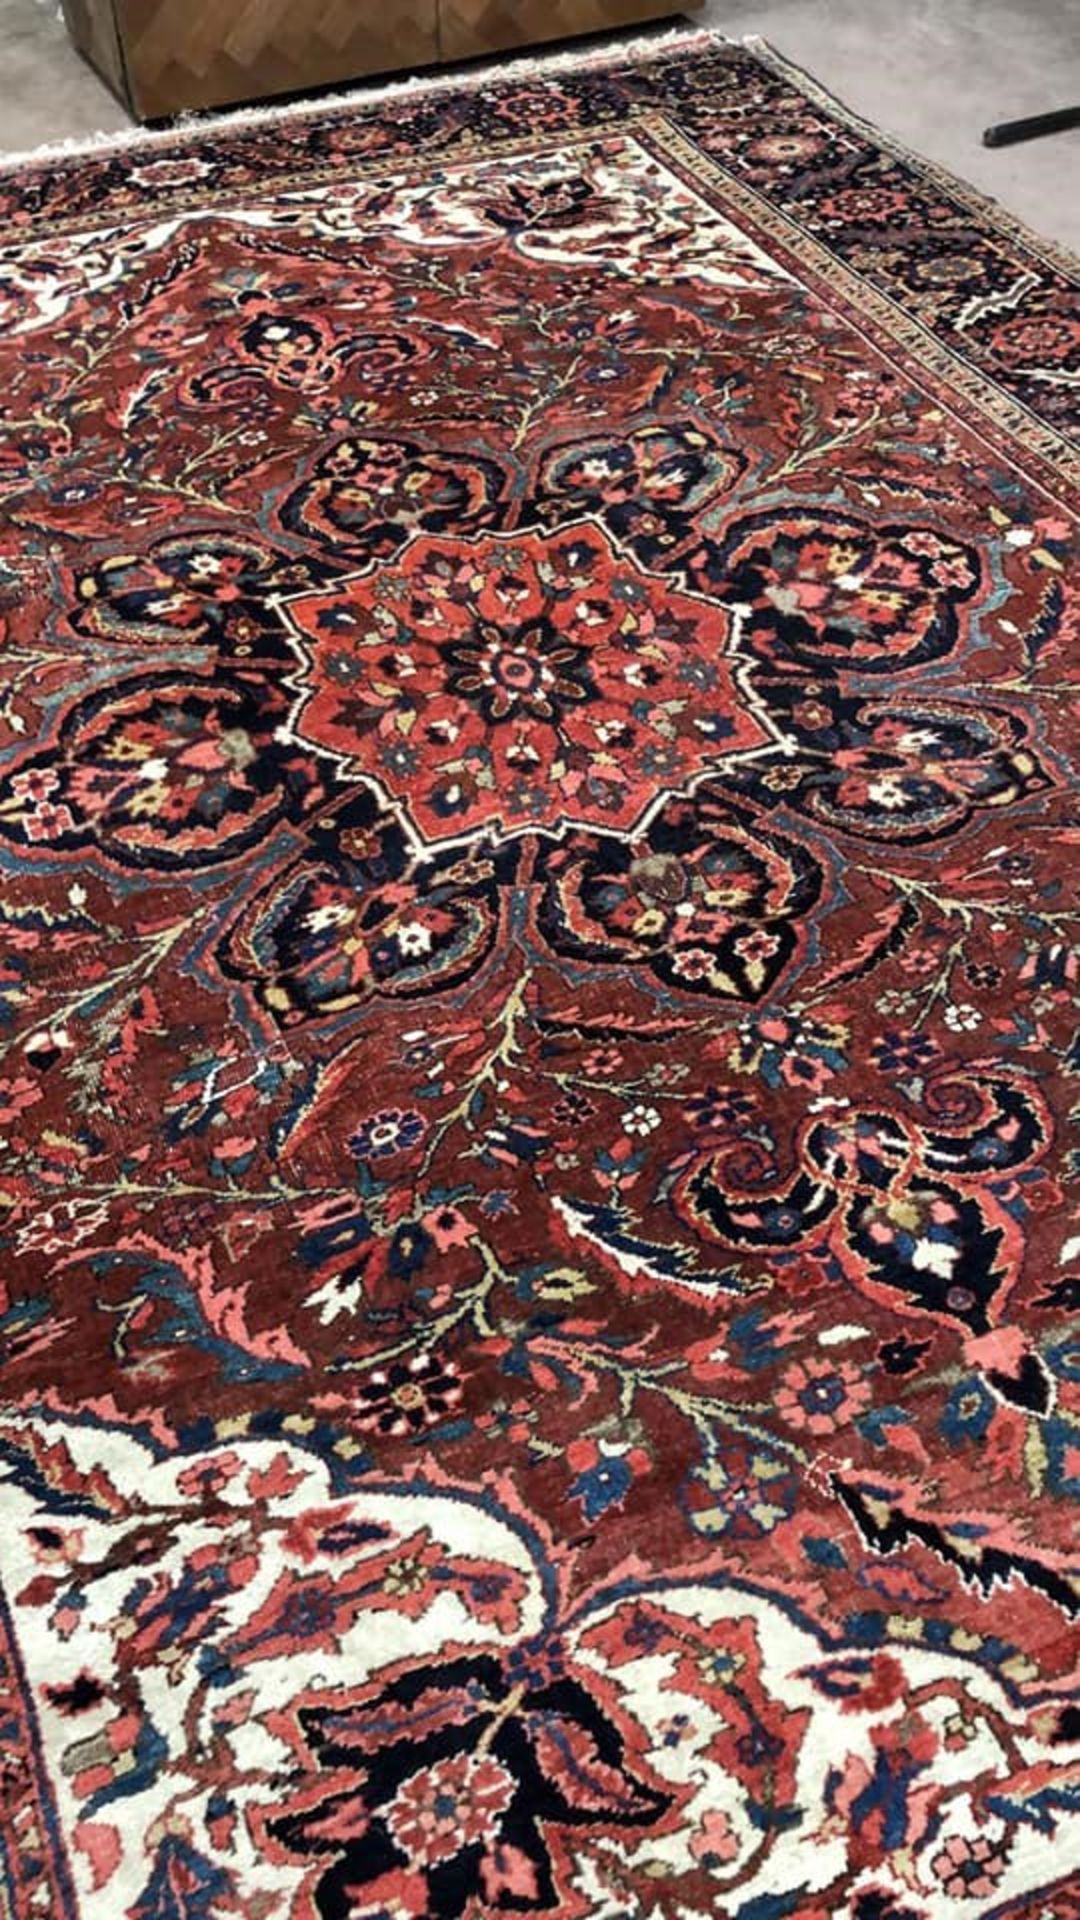 Iranian Carpet - Image 2 of 2